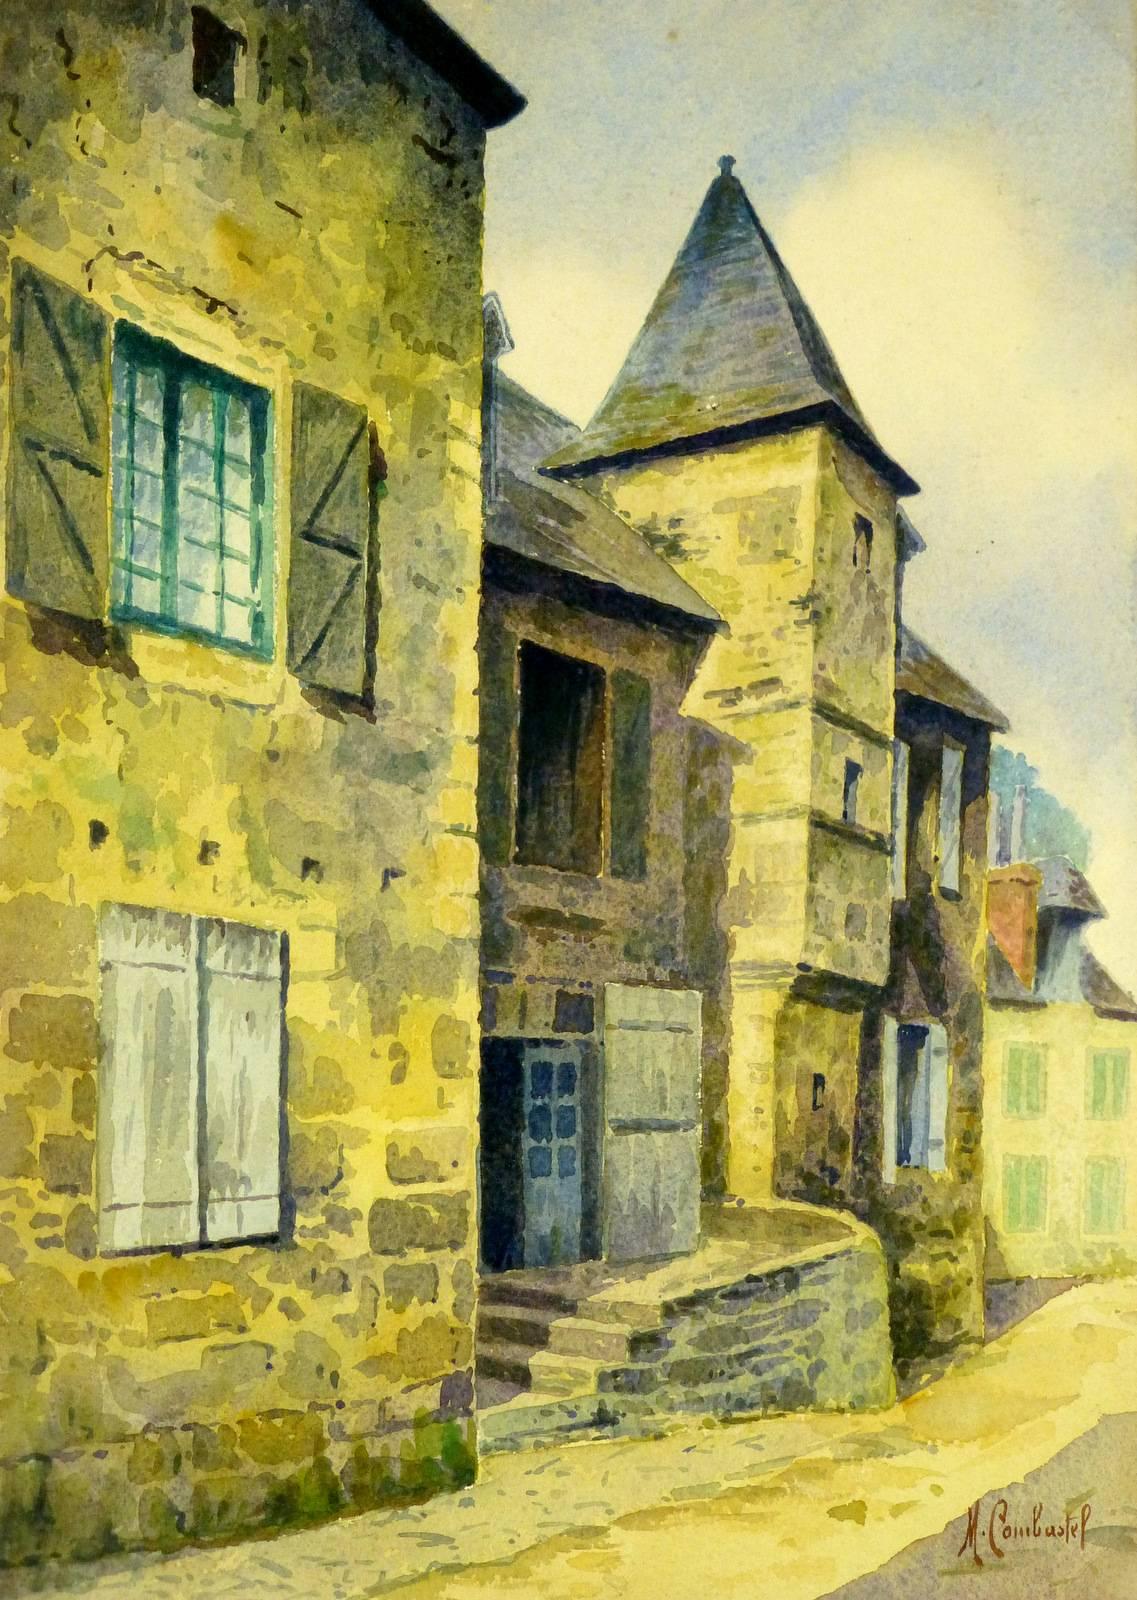 Magdeleine Combastel Landscape Art - Antique French Watercolor - Old Town Square 